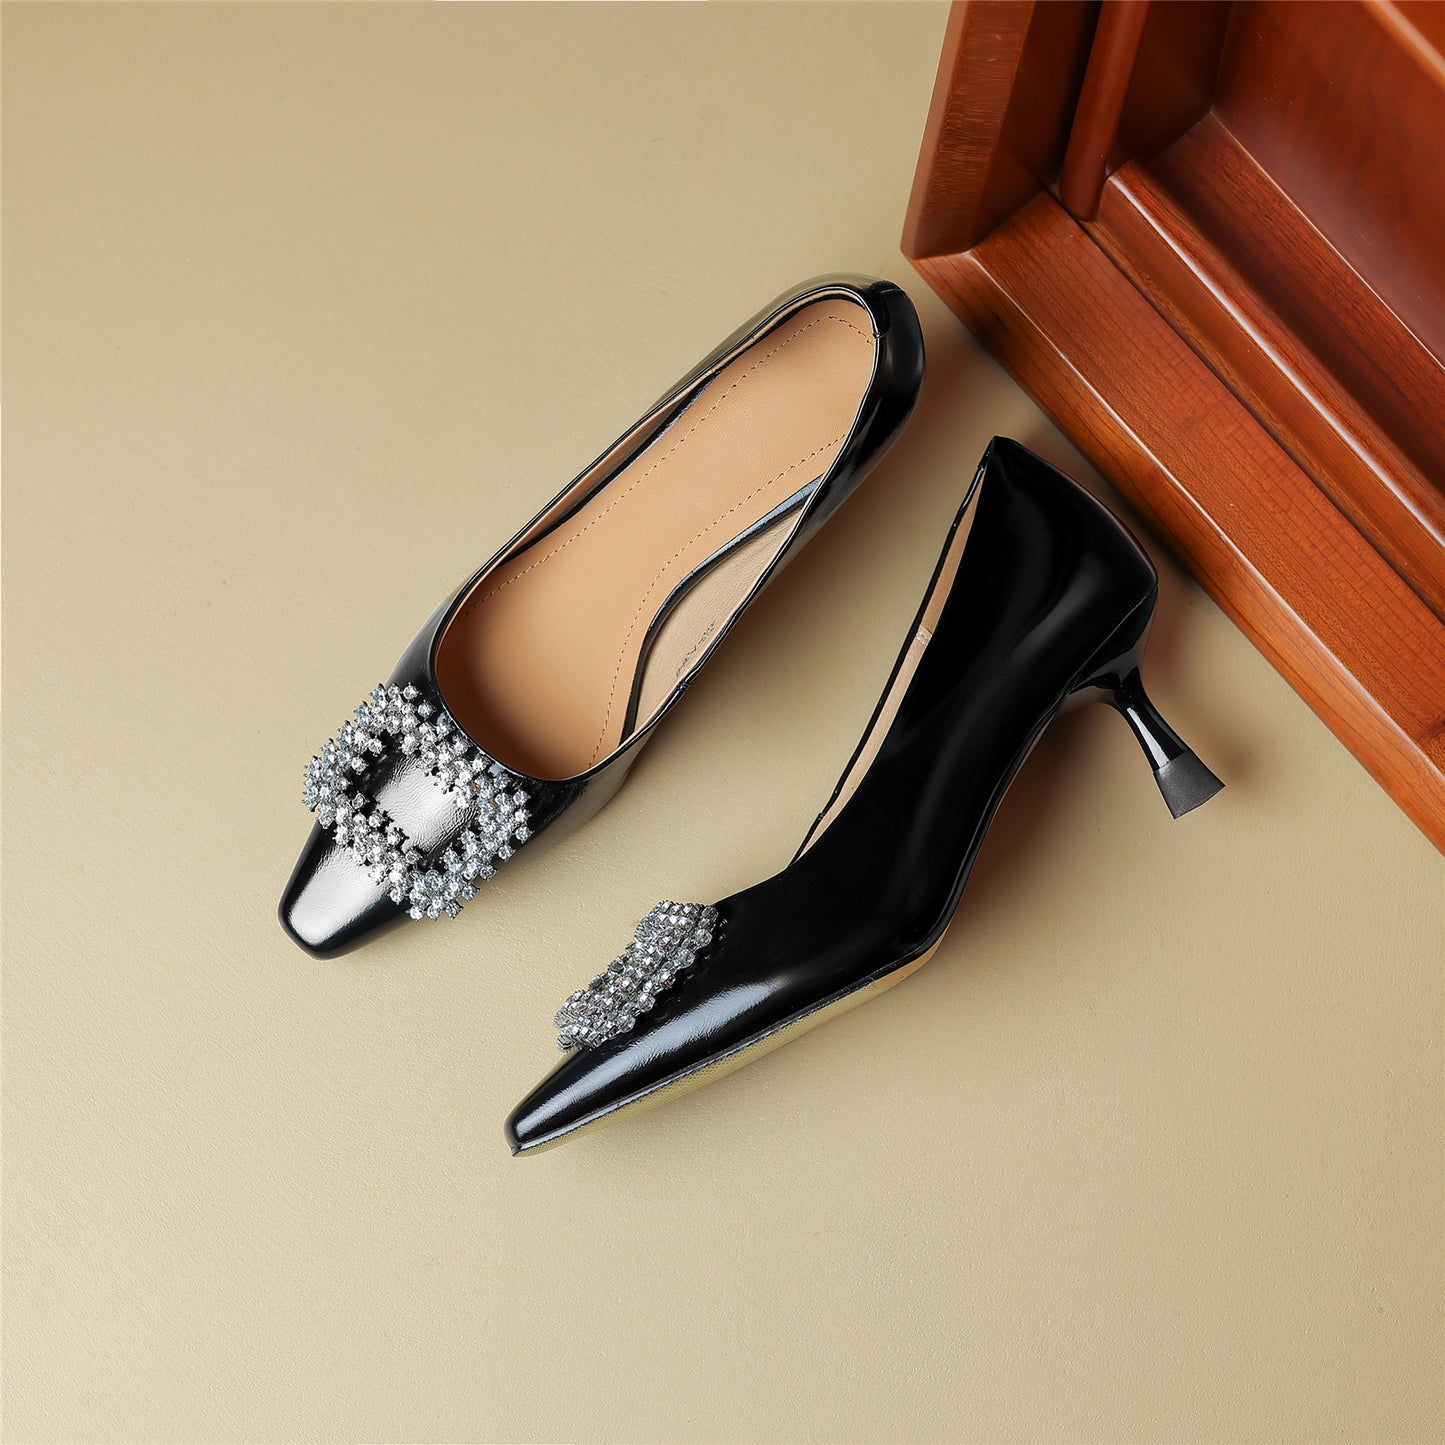 TinaCus Handmade Women's Genuine Leather Stiletto Heel Slip On Little Square Toe Pumps